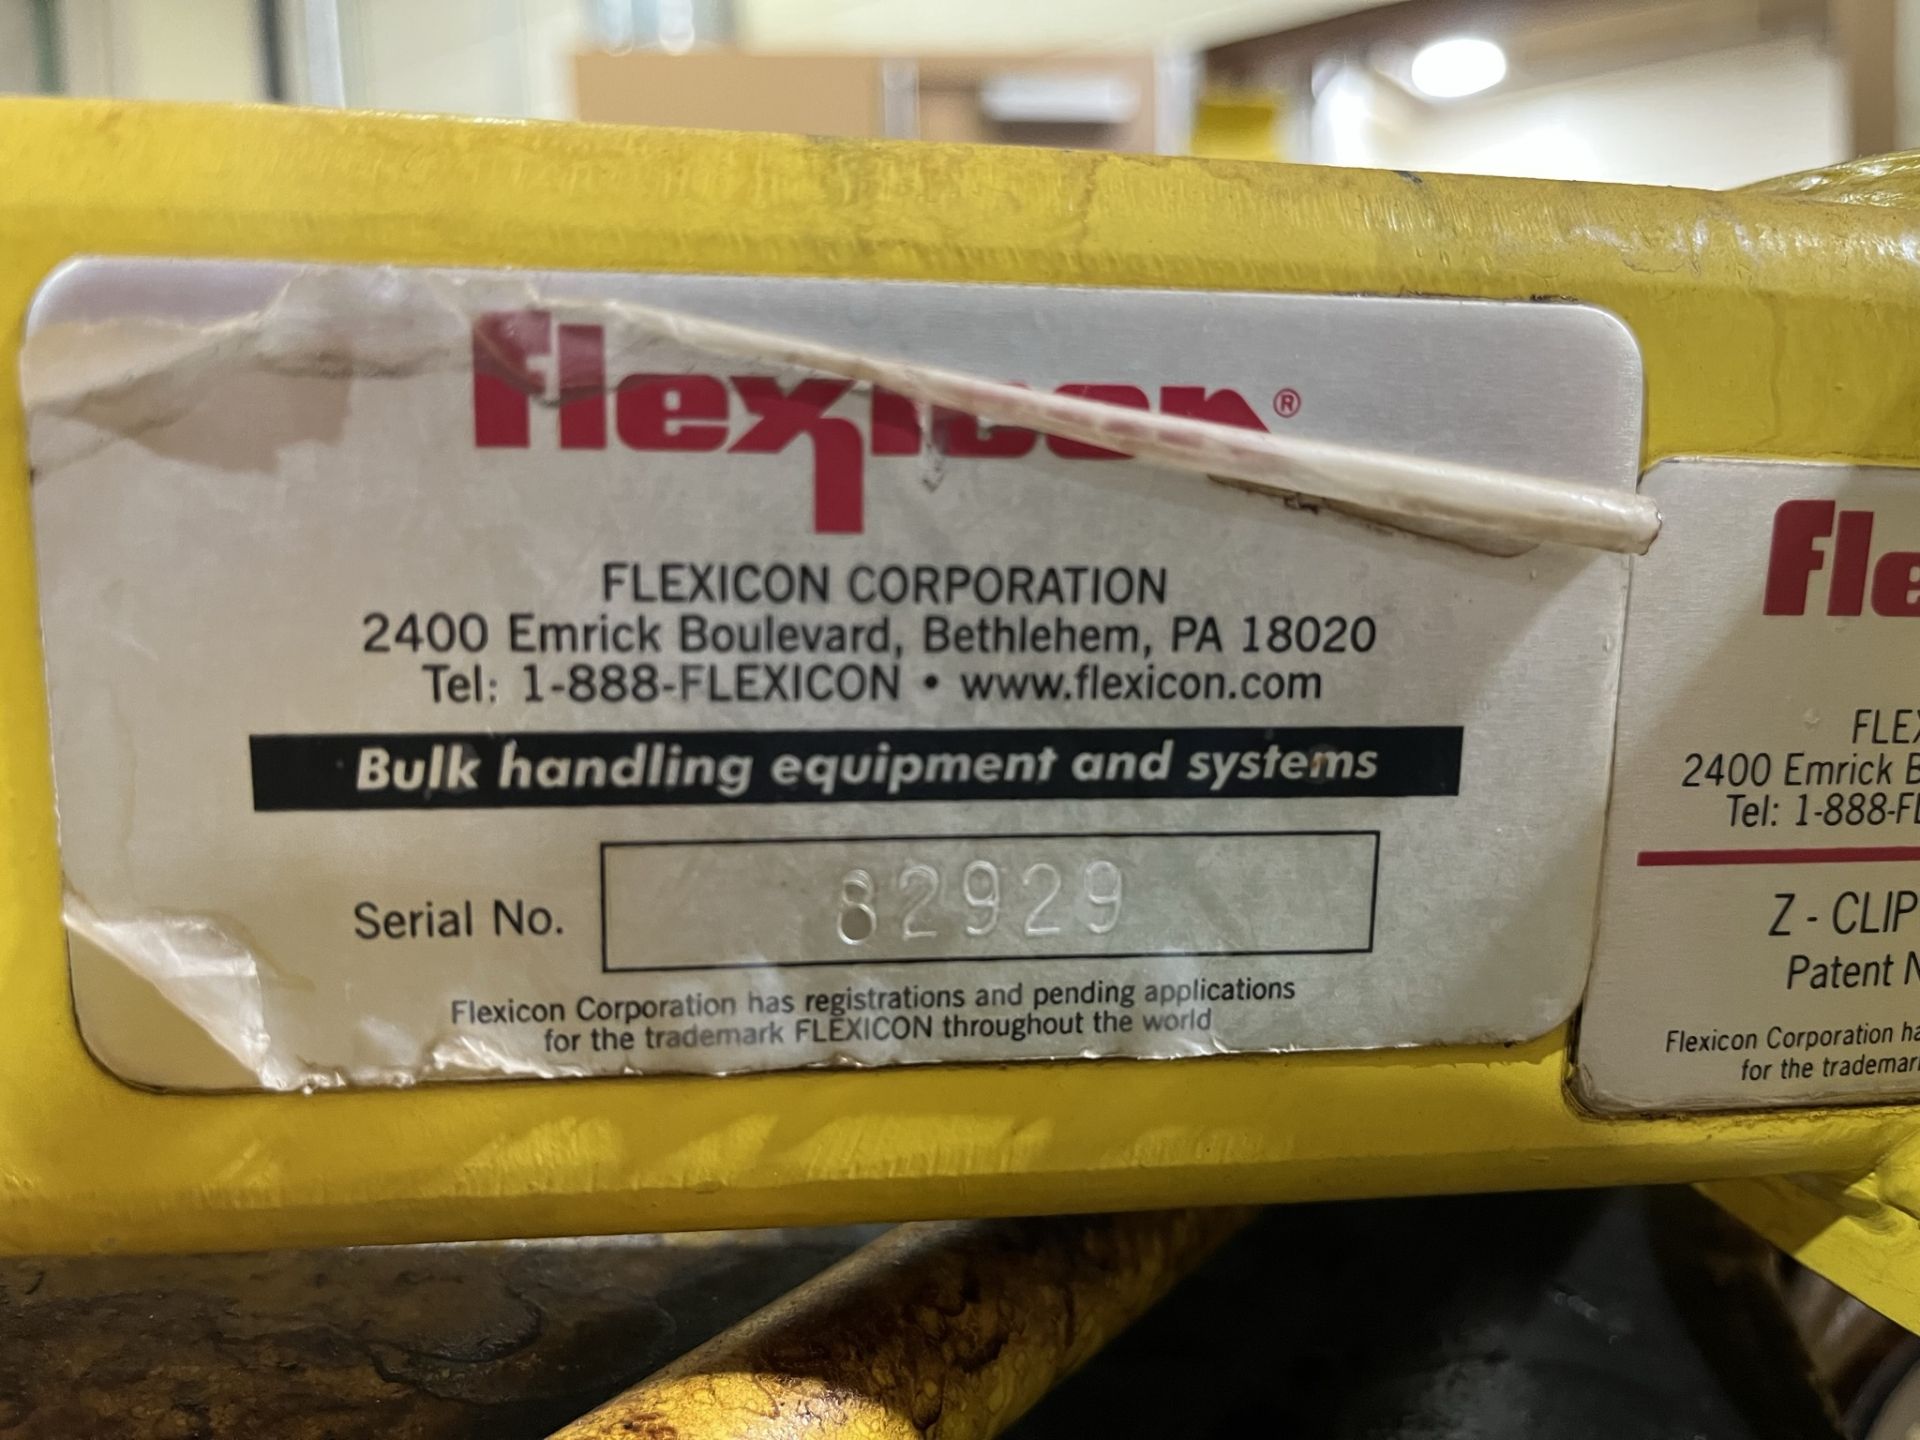 FLEXICON SUPERSAC UNLOADER, BULK BAG DISCHARGER SERIAL NO. 82929 3200 LBS MAX LOAD, INCLUDES I- - Image 6 of 9